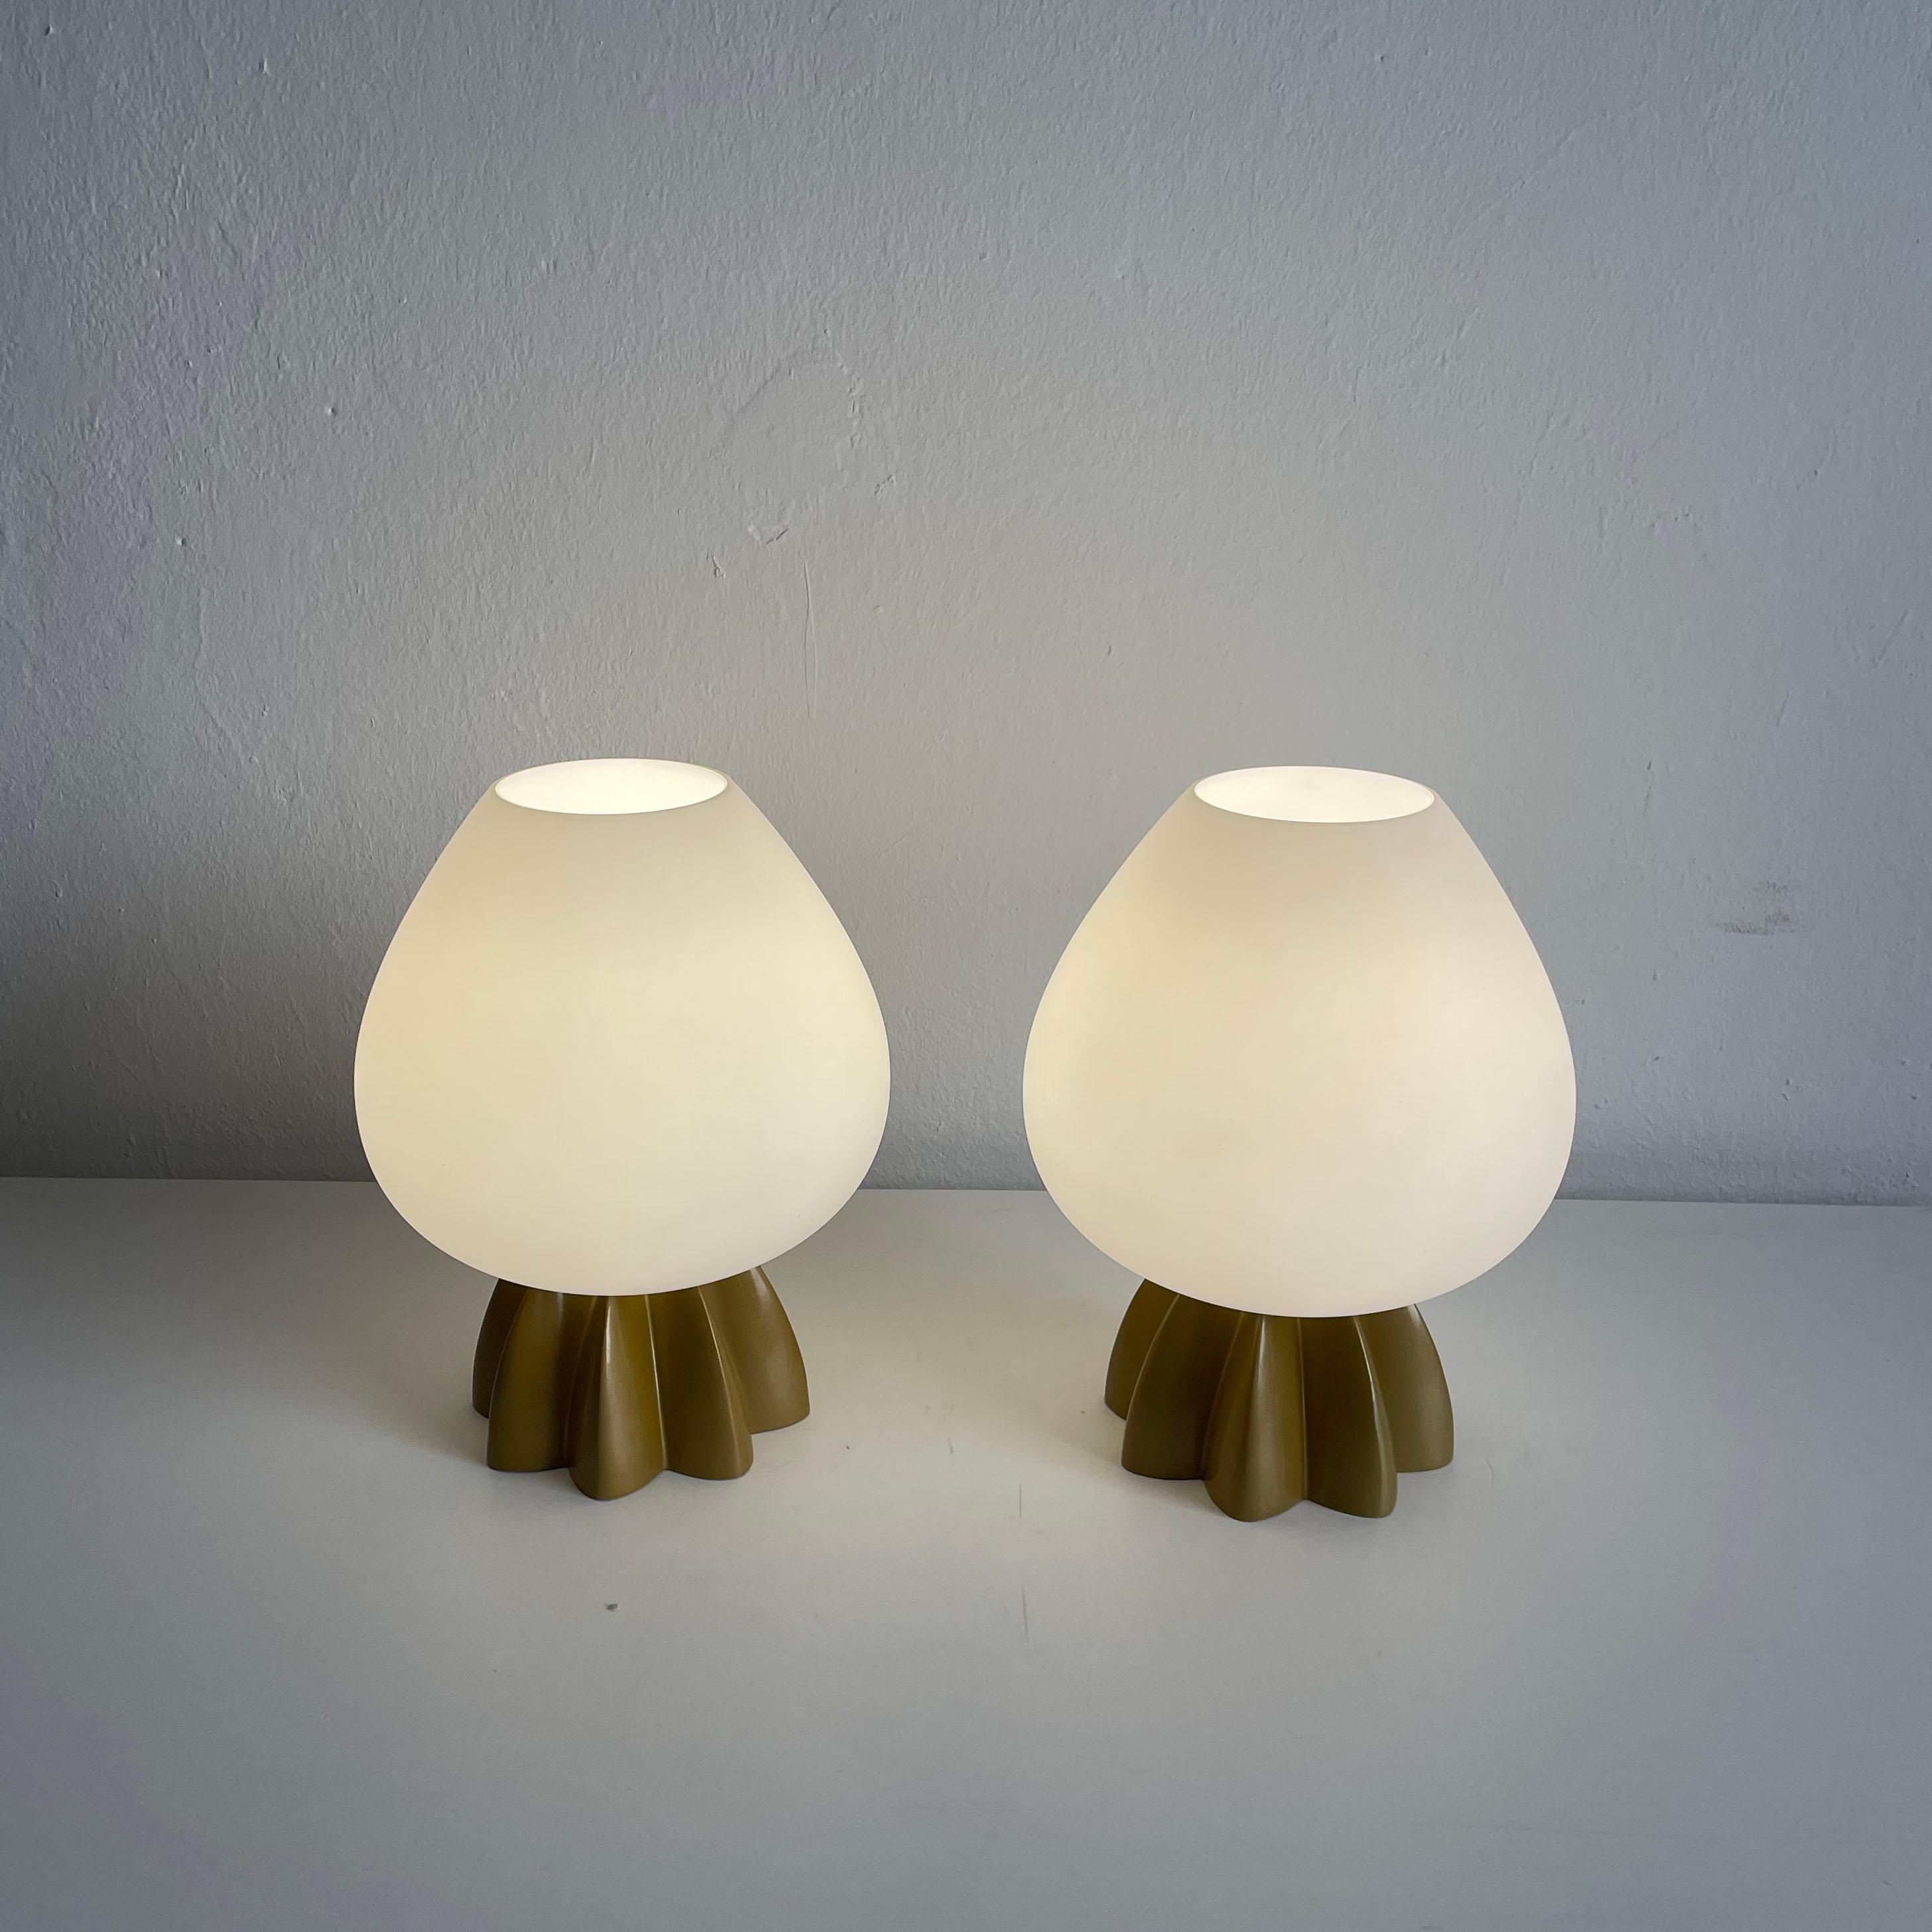 Set of 2 Foscarini Table Lamps, Model Fruits by Rodolfo Dordoni, Italy, 1980s For Sale 6